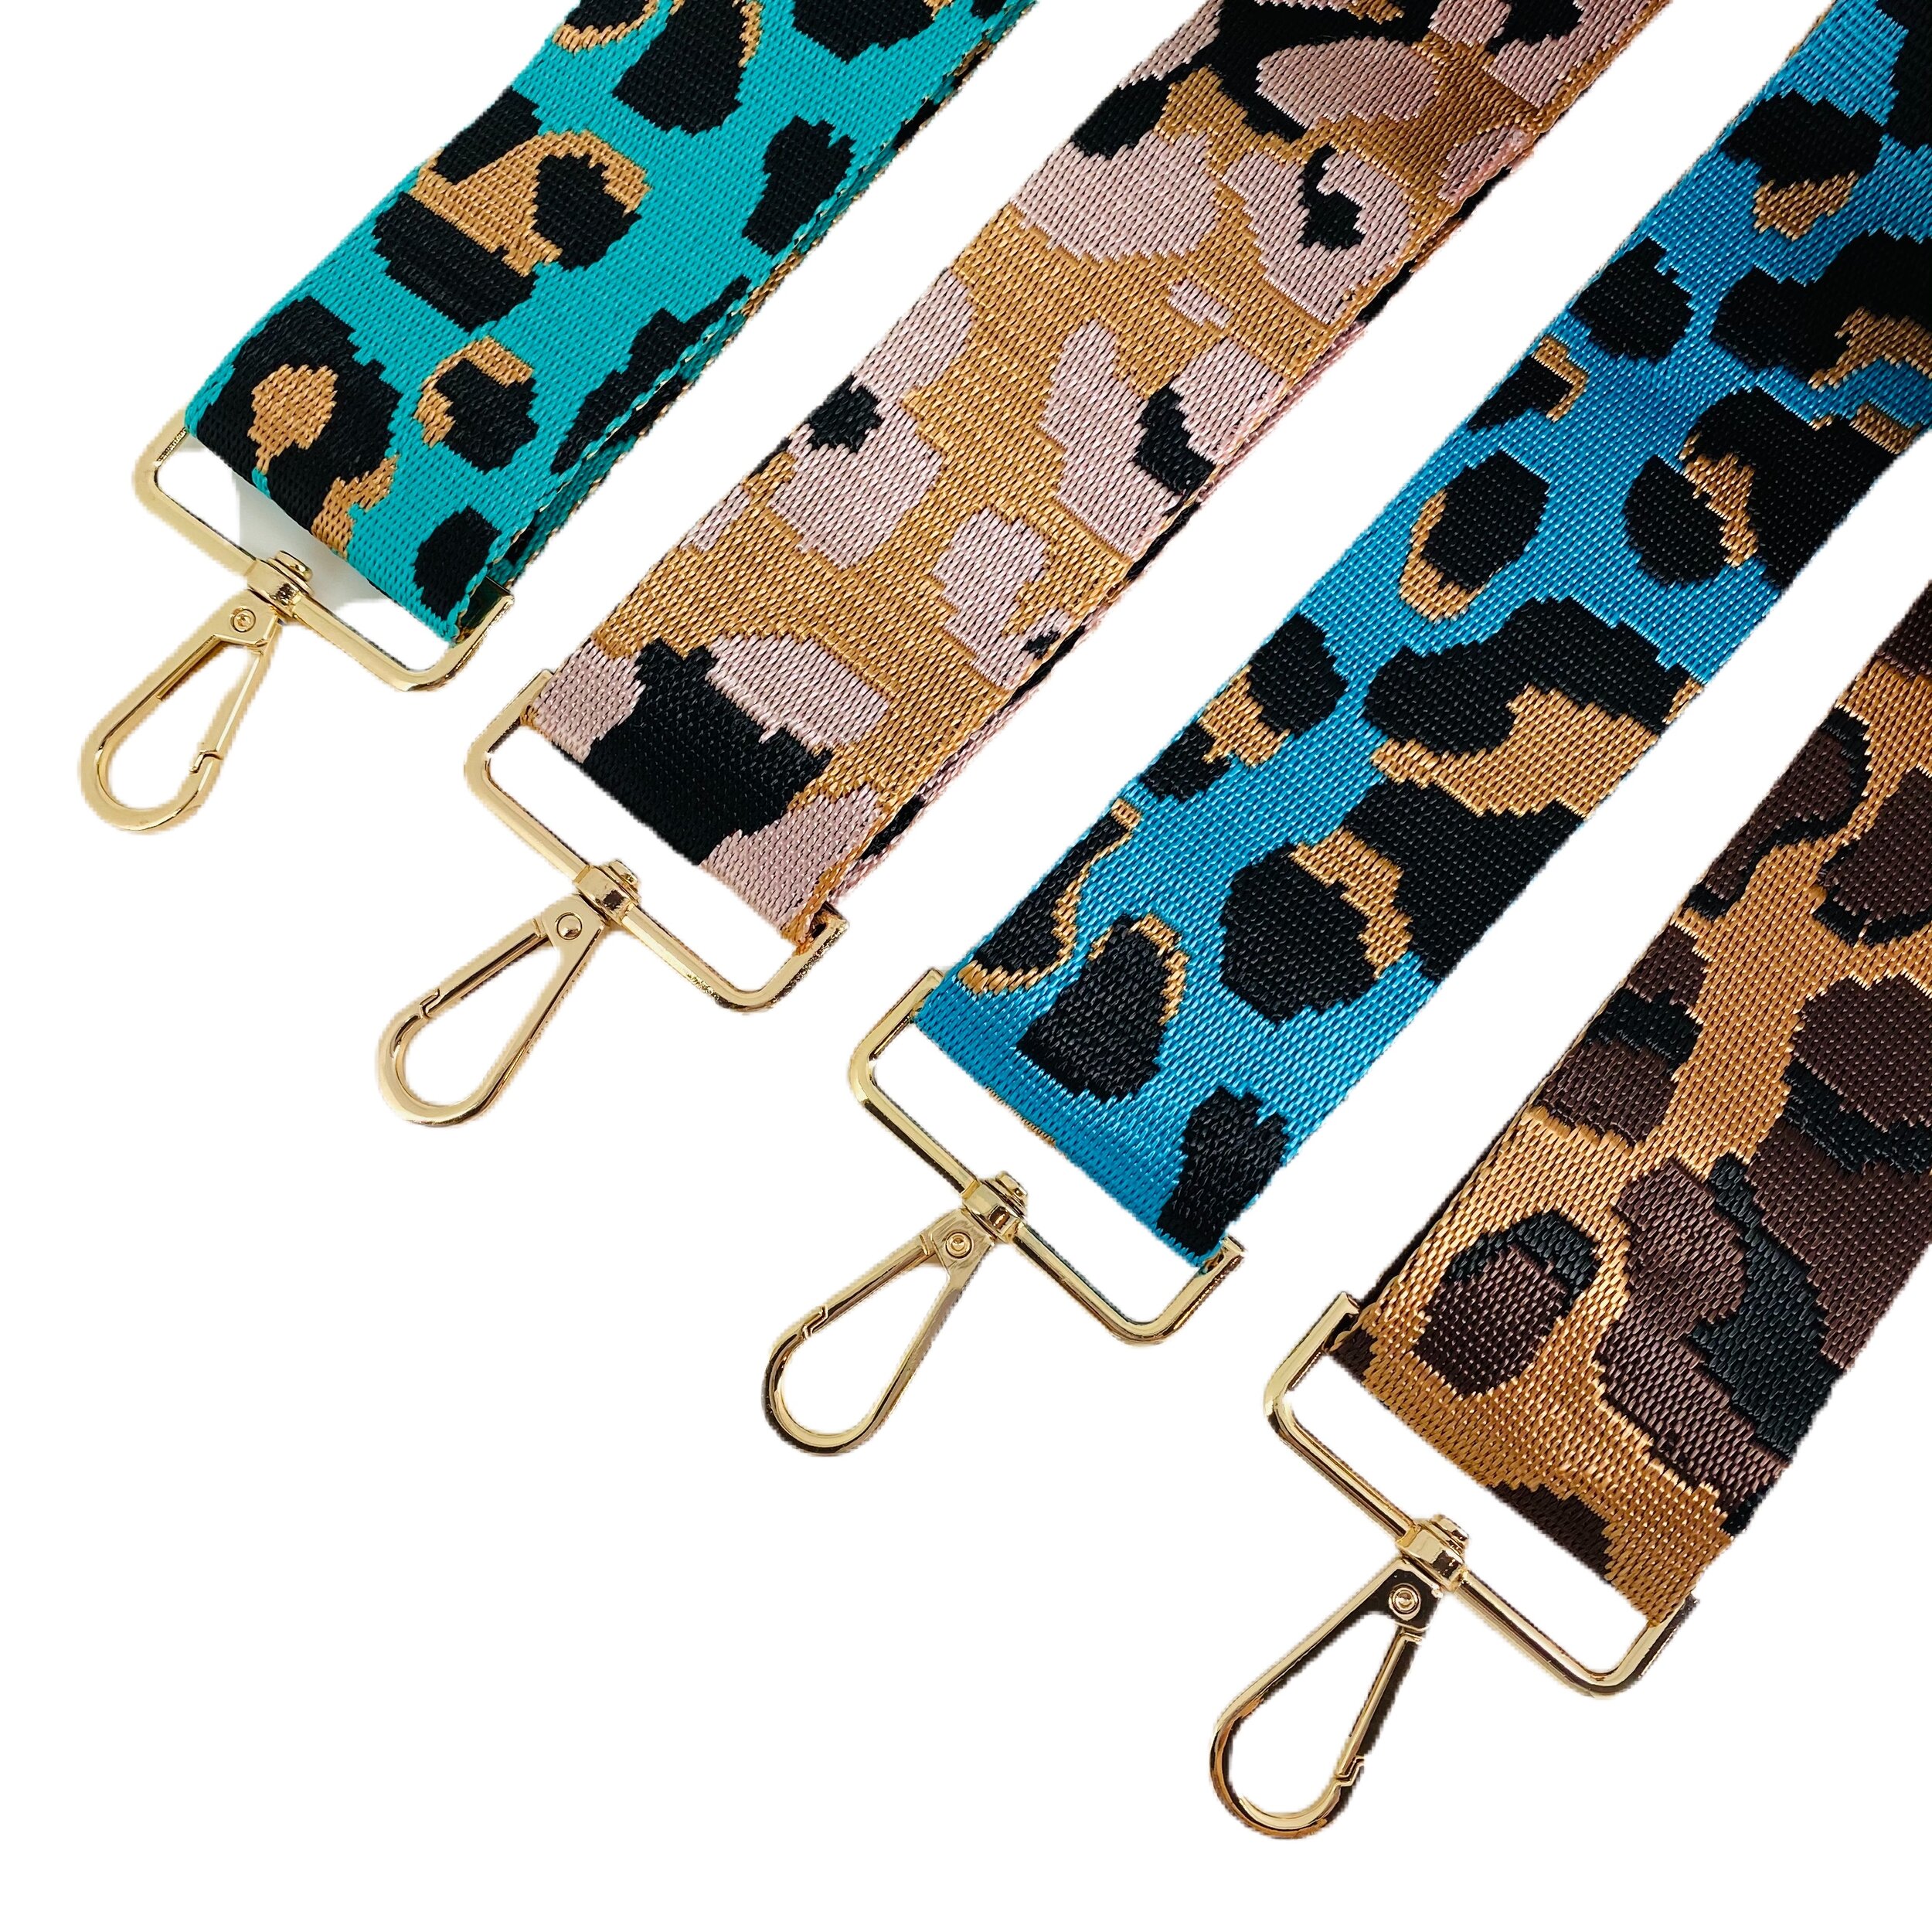 Bags & Purses Handbags Purse Straps Mix and Match Animal Leopard Print Cross Body Bag Straps Changable Detachable Gold Hardware Clip On 